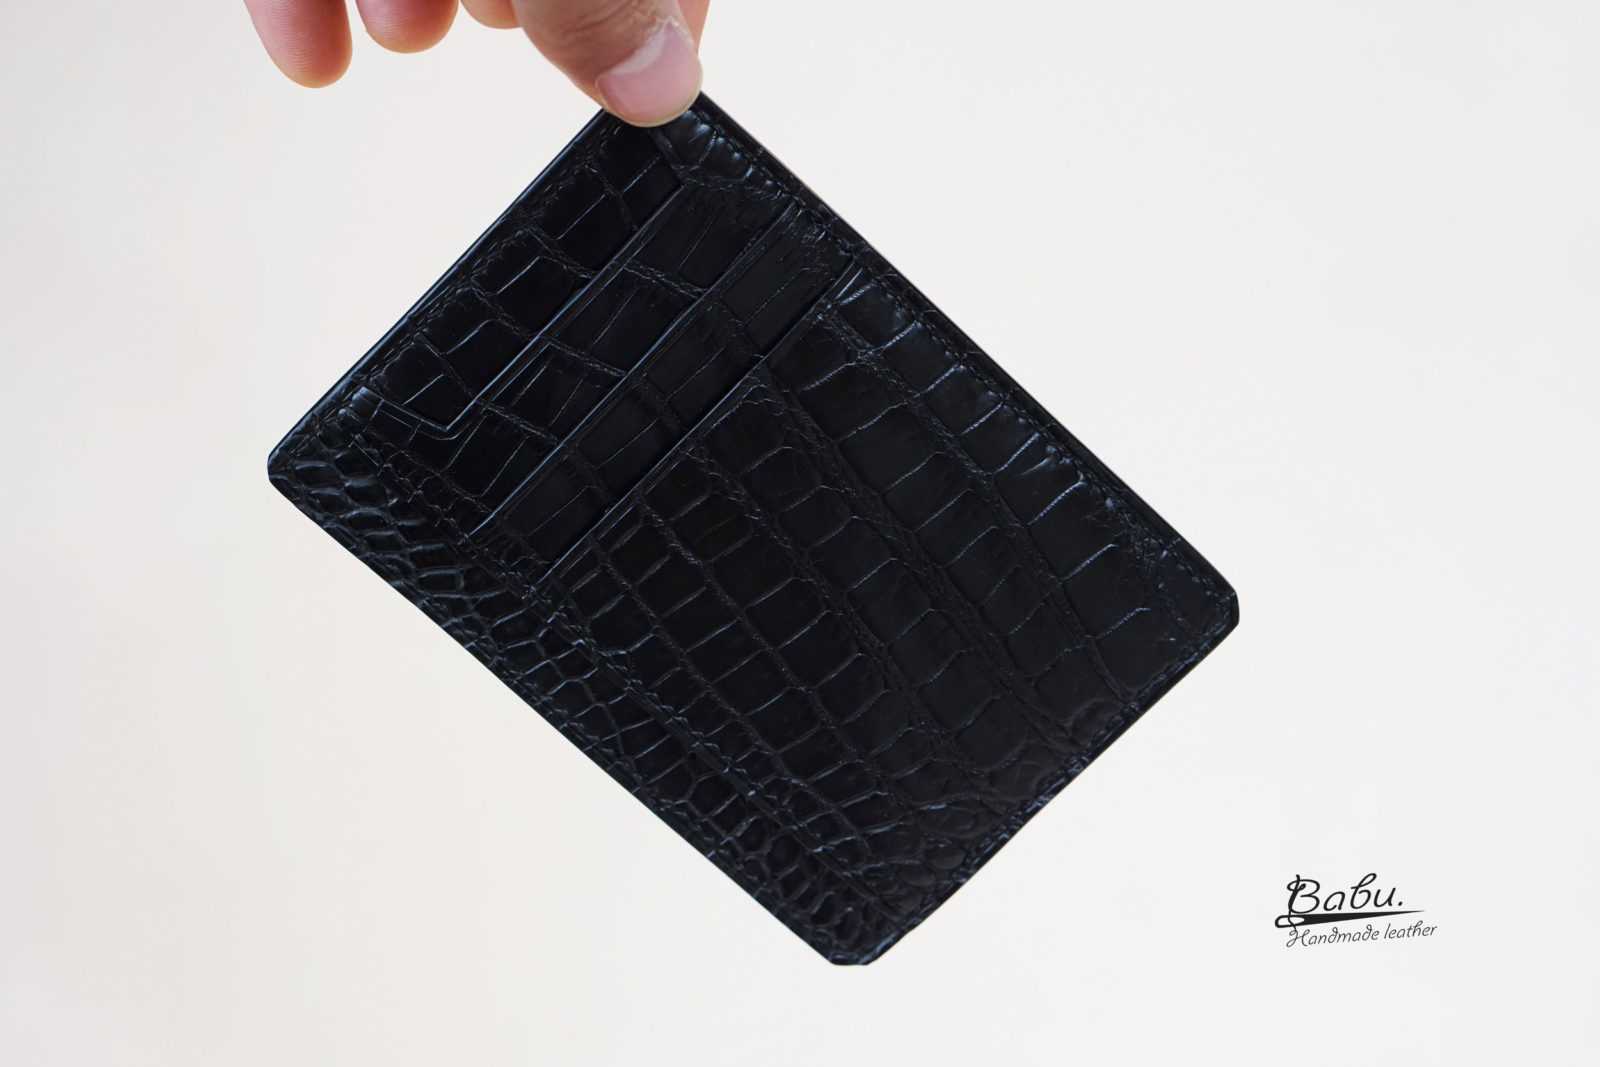 American Alligator Leather Business/Credit Card Case - Walnut